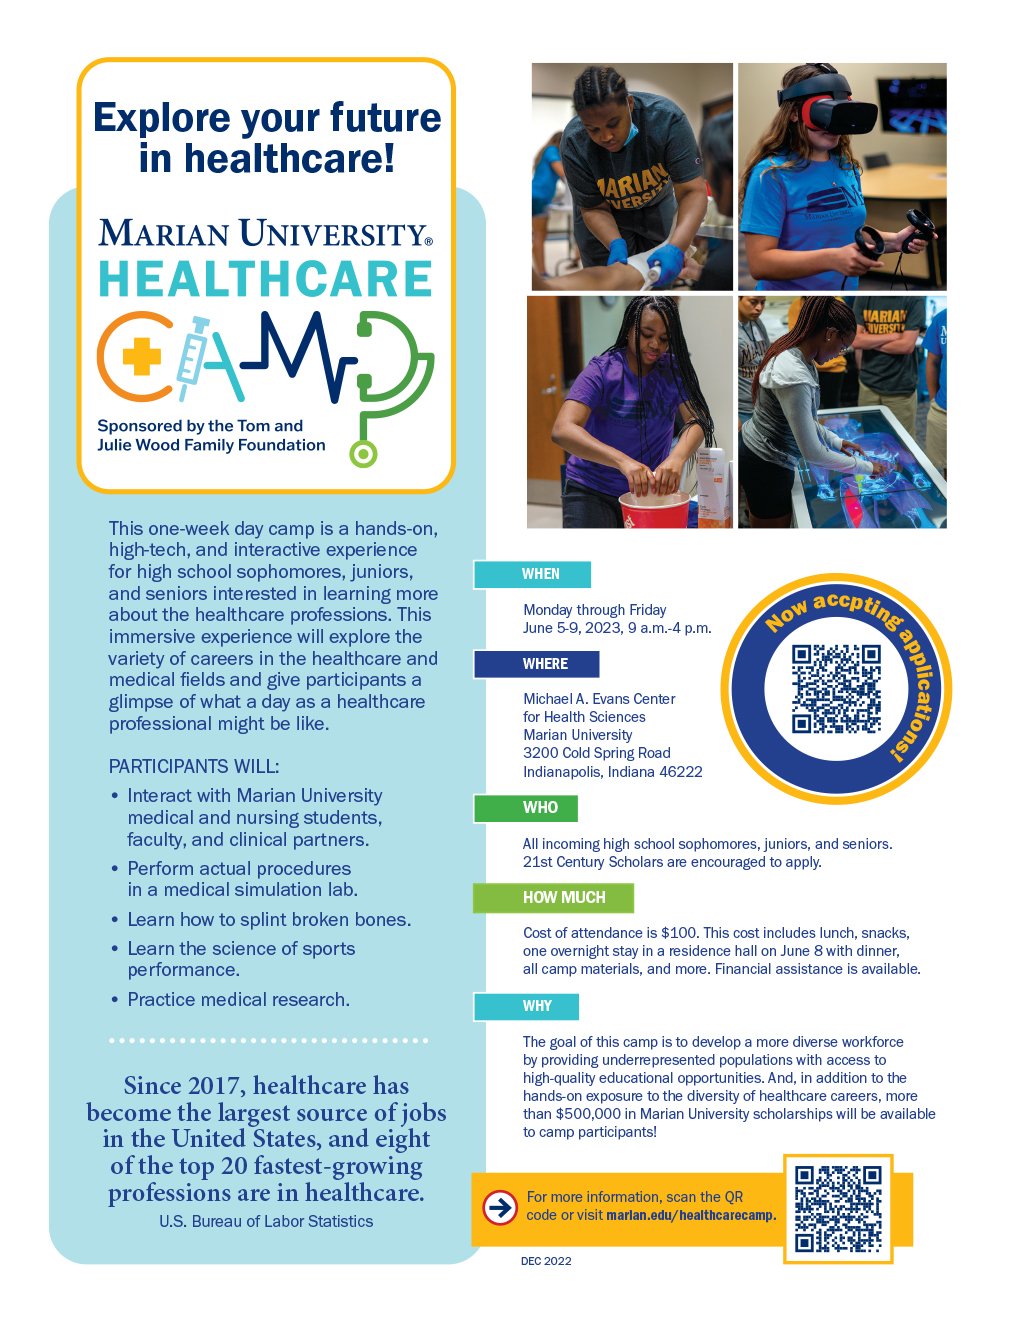 Marian University Healthcare Camp — EXPLORADOOR